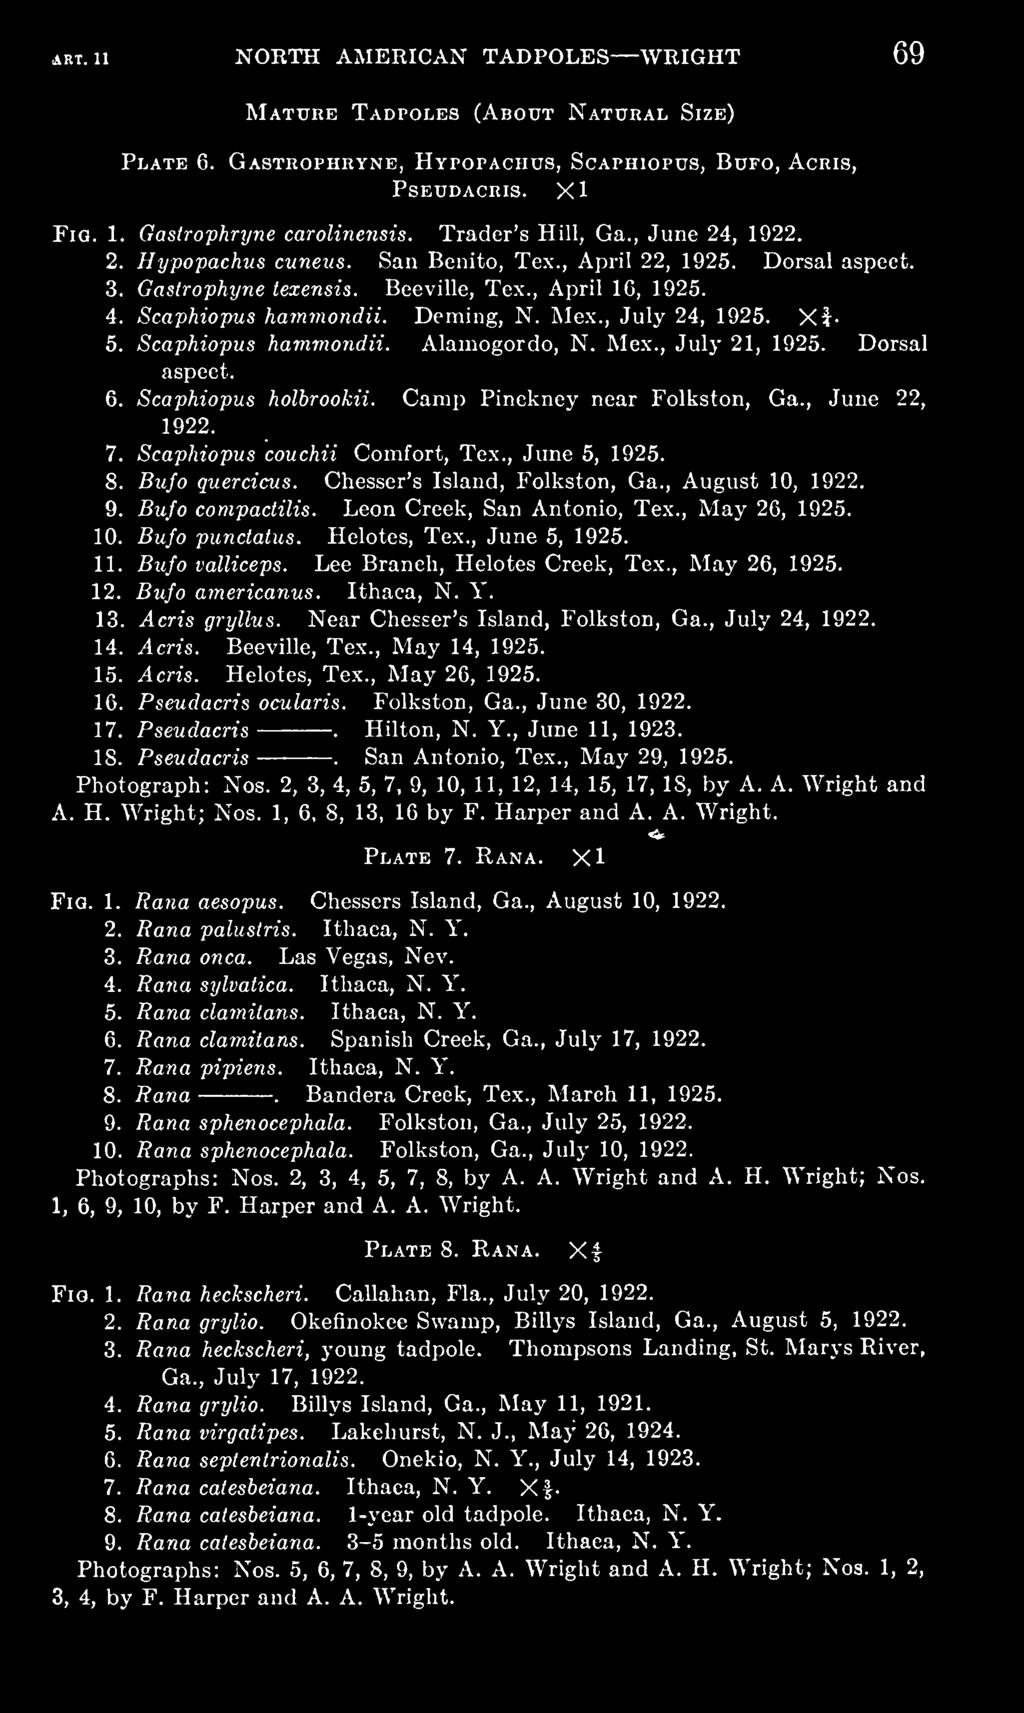 Helotes, Tex., June 5, 1925. 11. Bufo valliceps. Lee Branch, Helotes Creek, Tex., May 26, 1925. 12. Bufo americanus. Ithaca, N. Y. 13. Acris gryllus. Near Chesser's Island, Folkston, Ga.